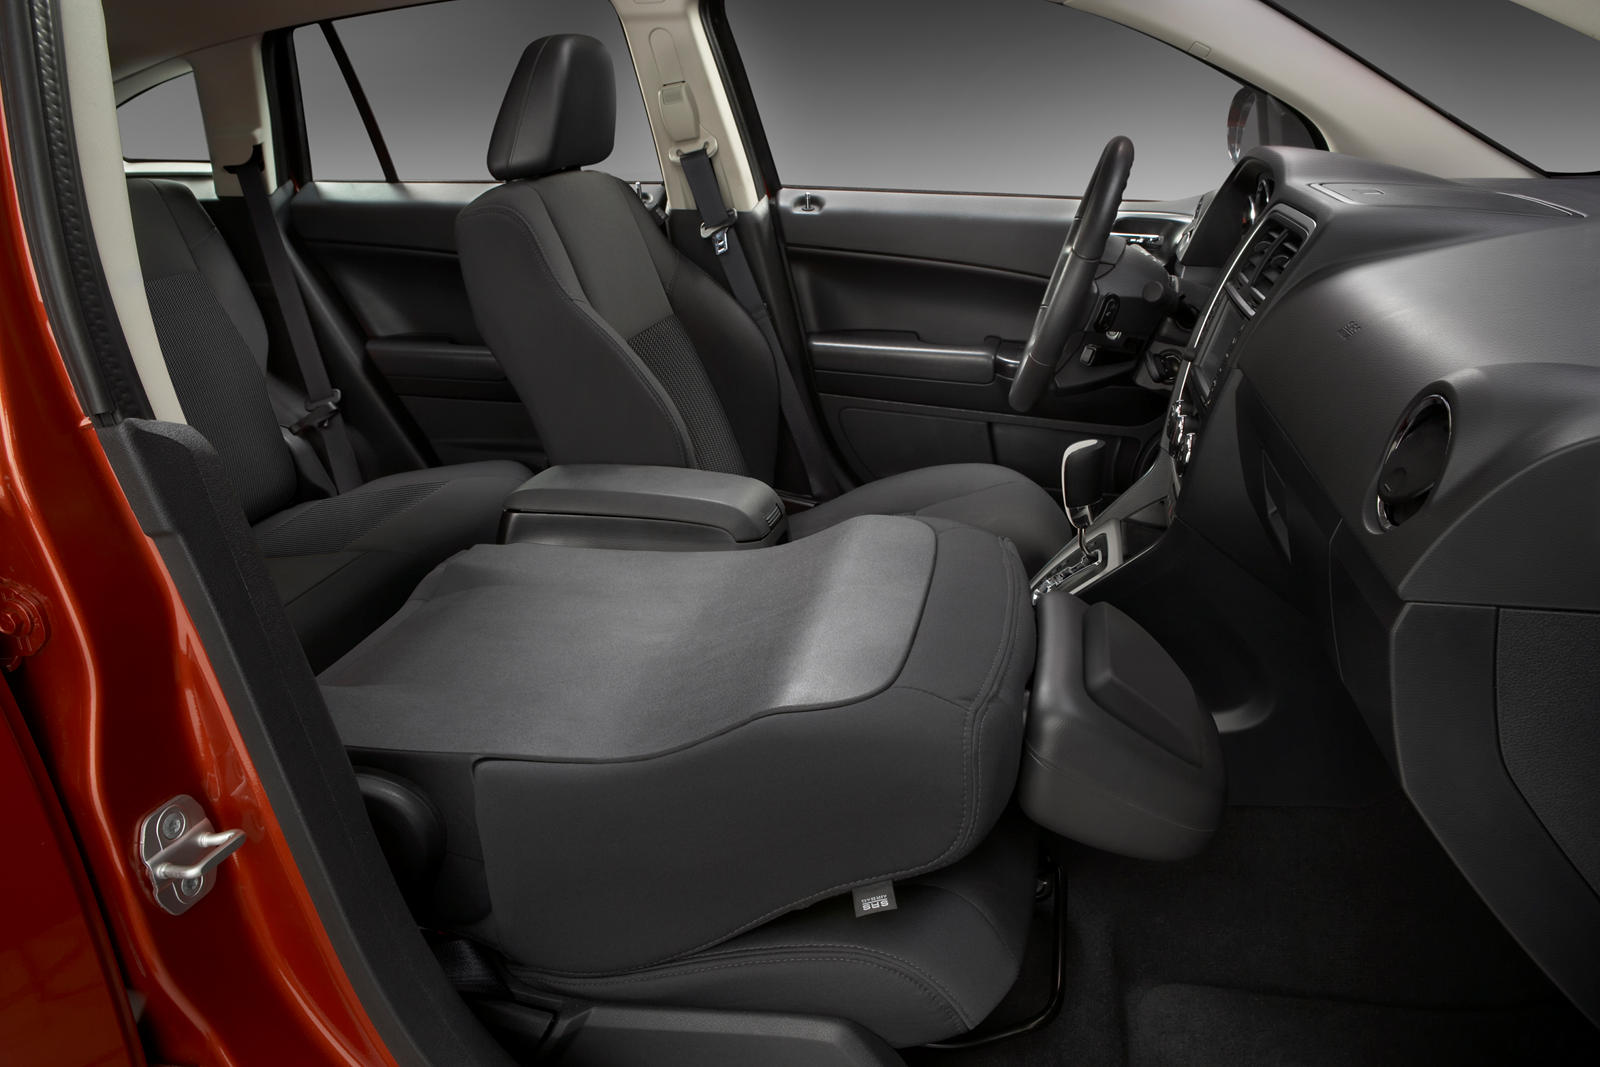 Dodge Caliber interior - Seats